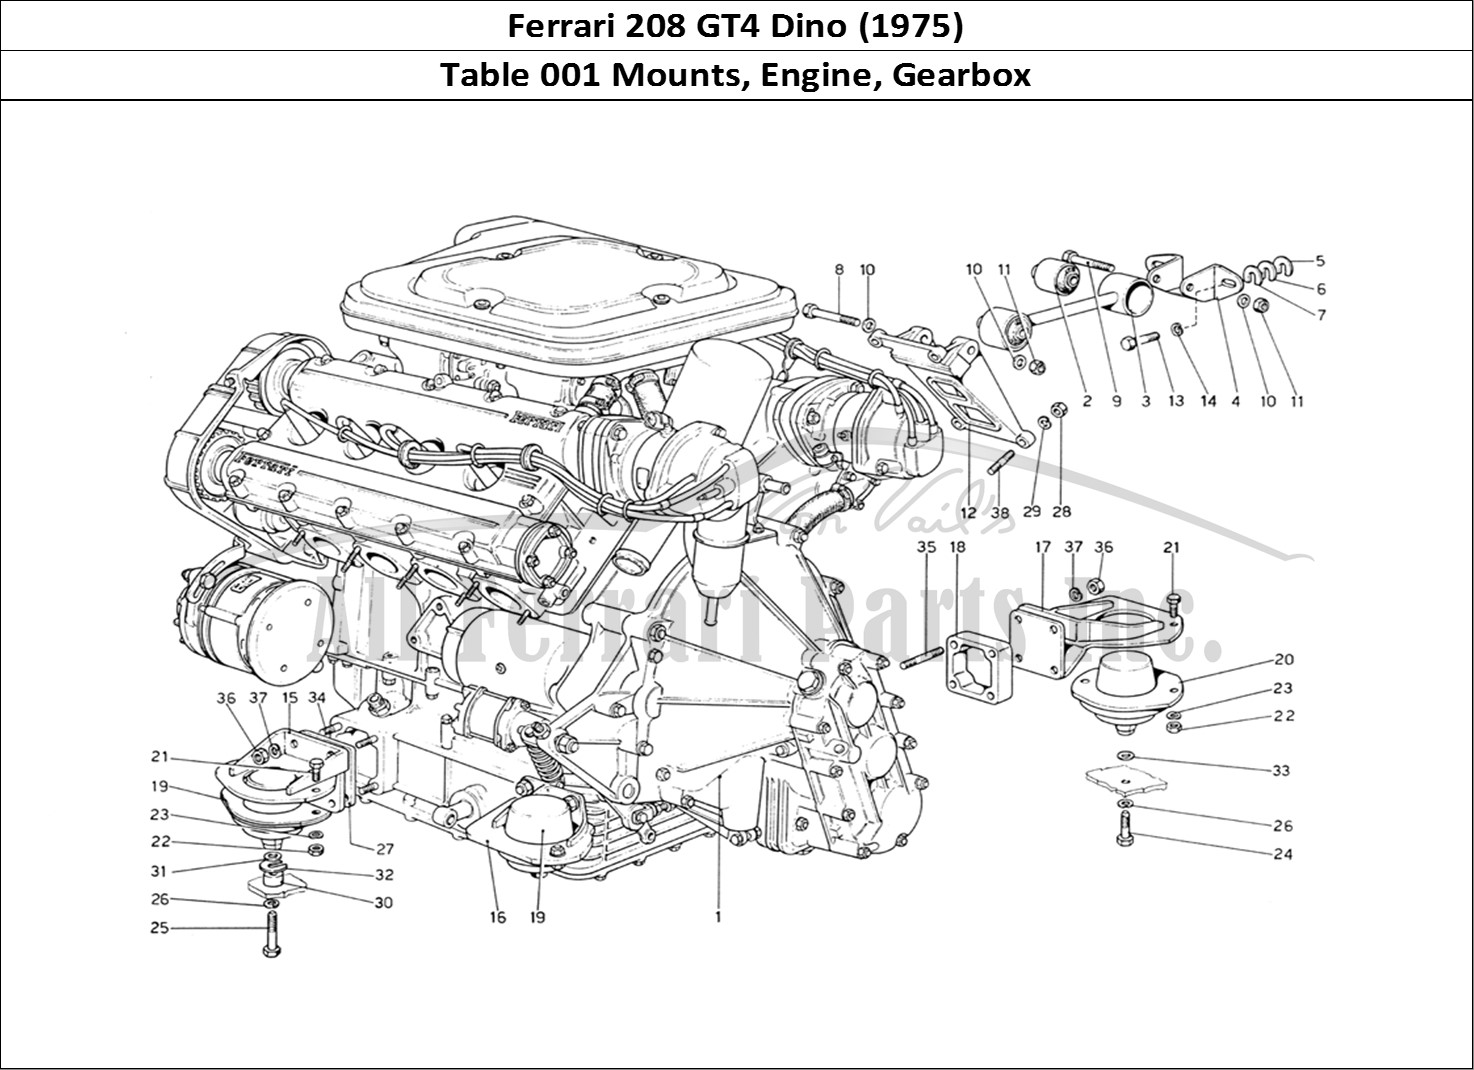 Ferrari Parts Ferrari 208 GT4 Dino (1975) Page 001 Engine - Gearbox and Supp